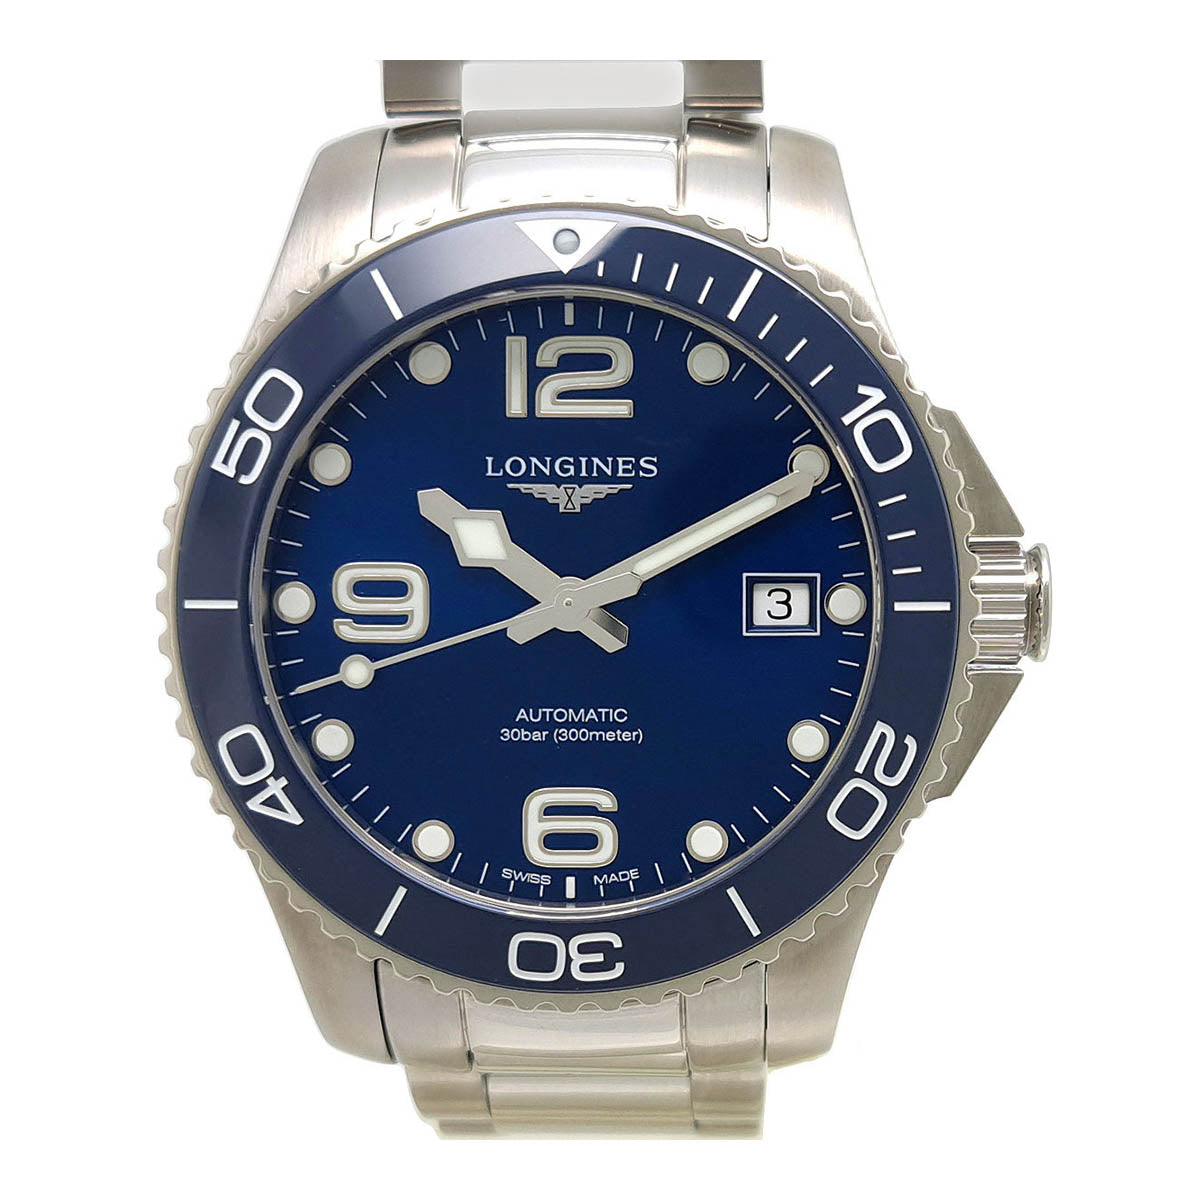 Automatic HydroConquest Wrist Watch L3.780.4